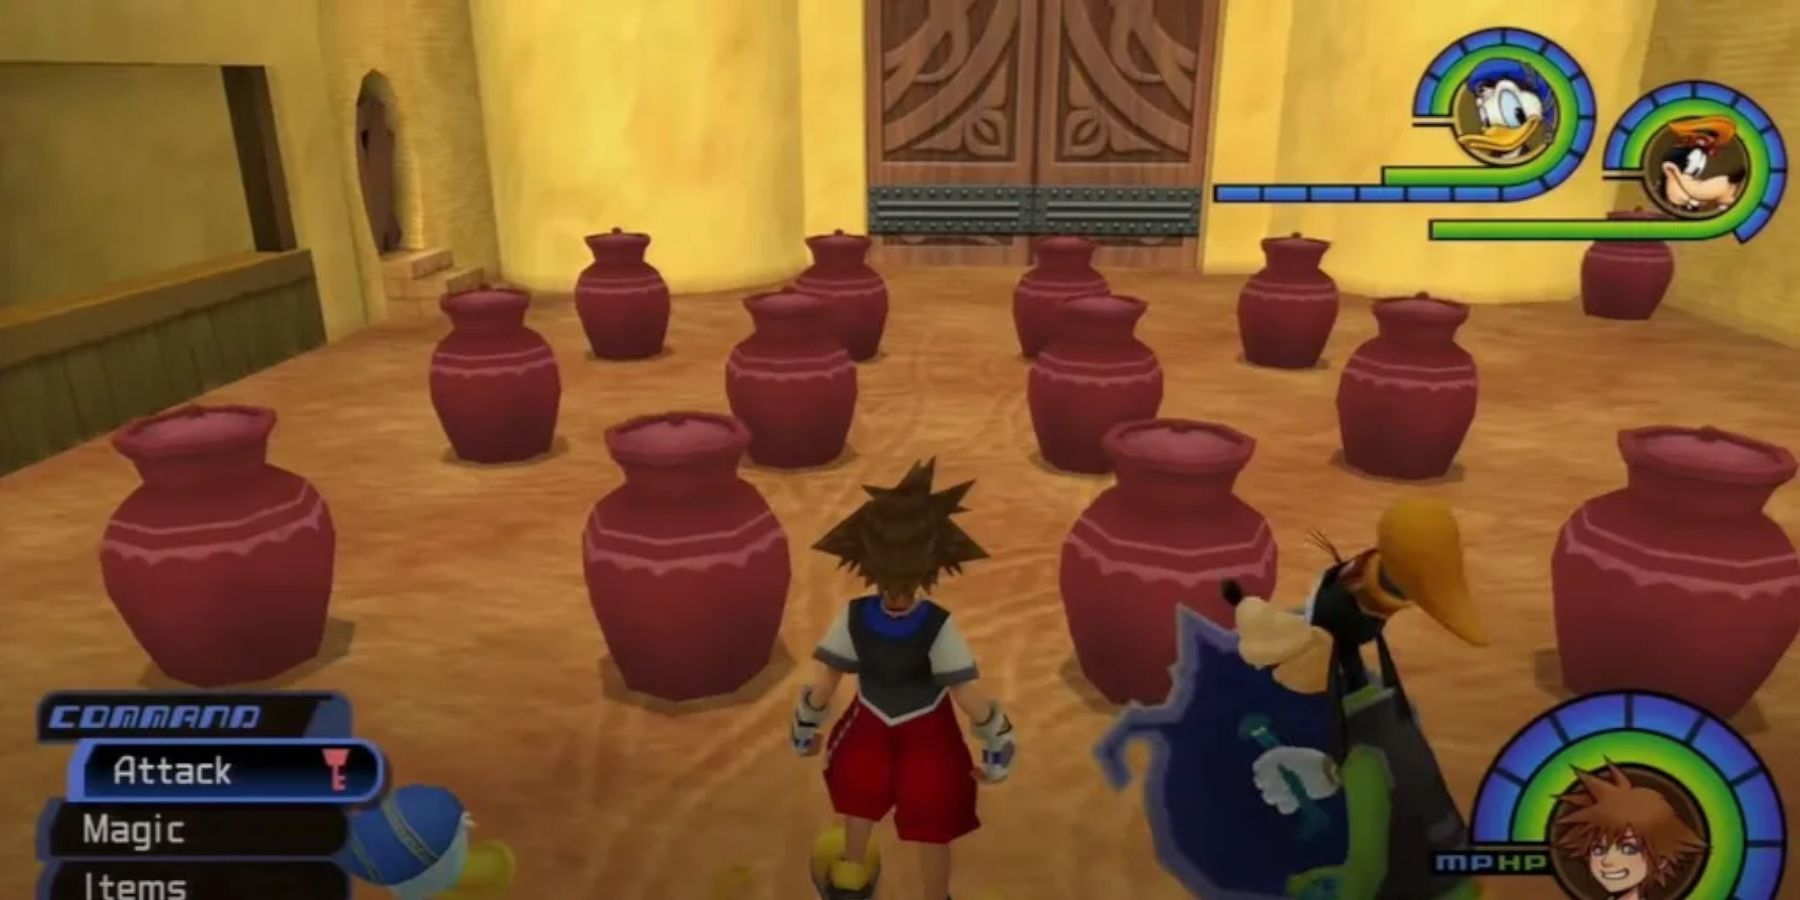 Kingdom Hearts Sora in the pot room